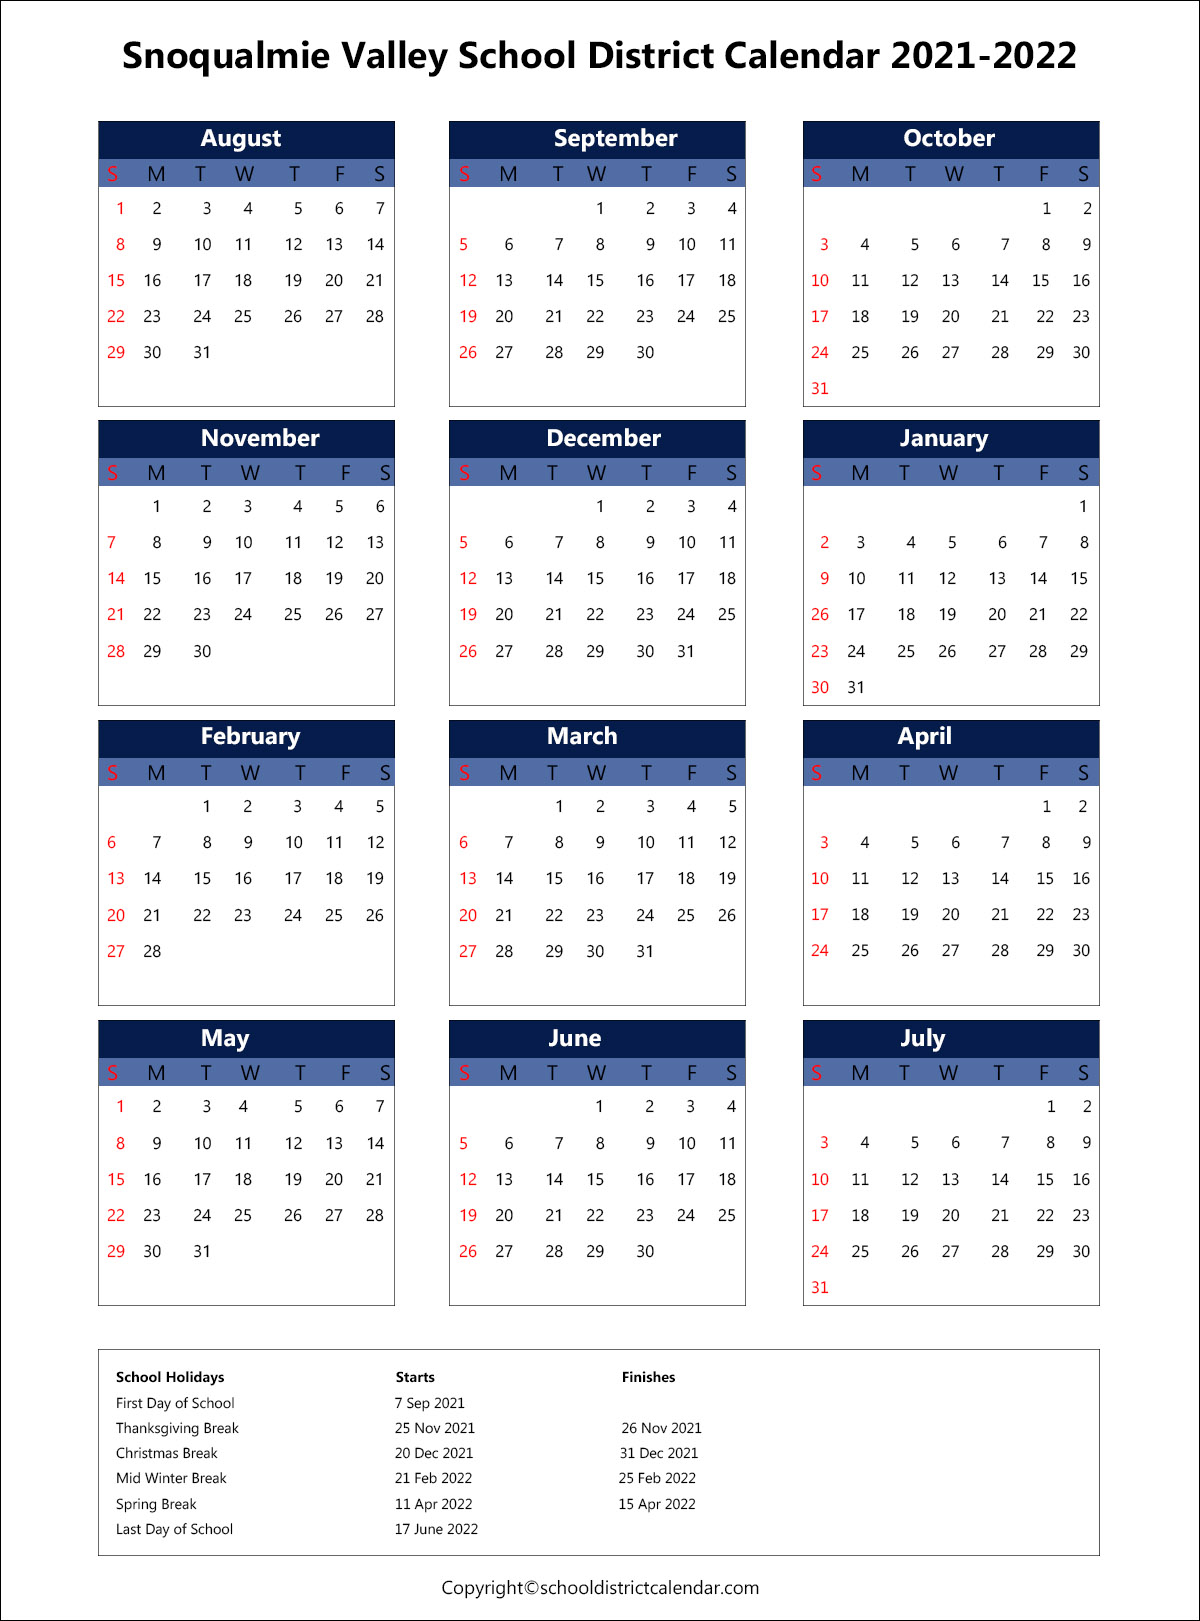 Snoqualmie Valley School District Calendar 2021